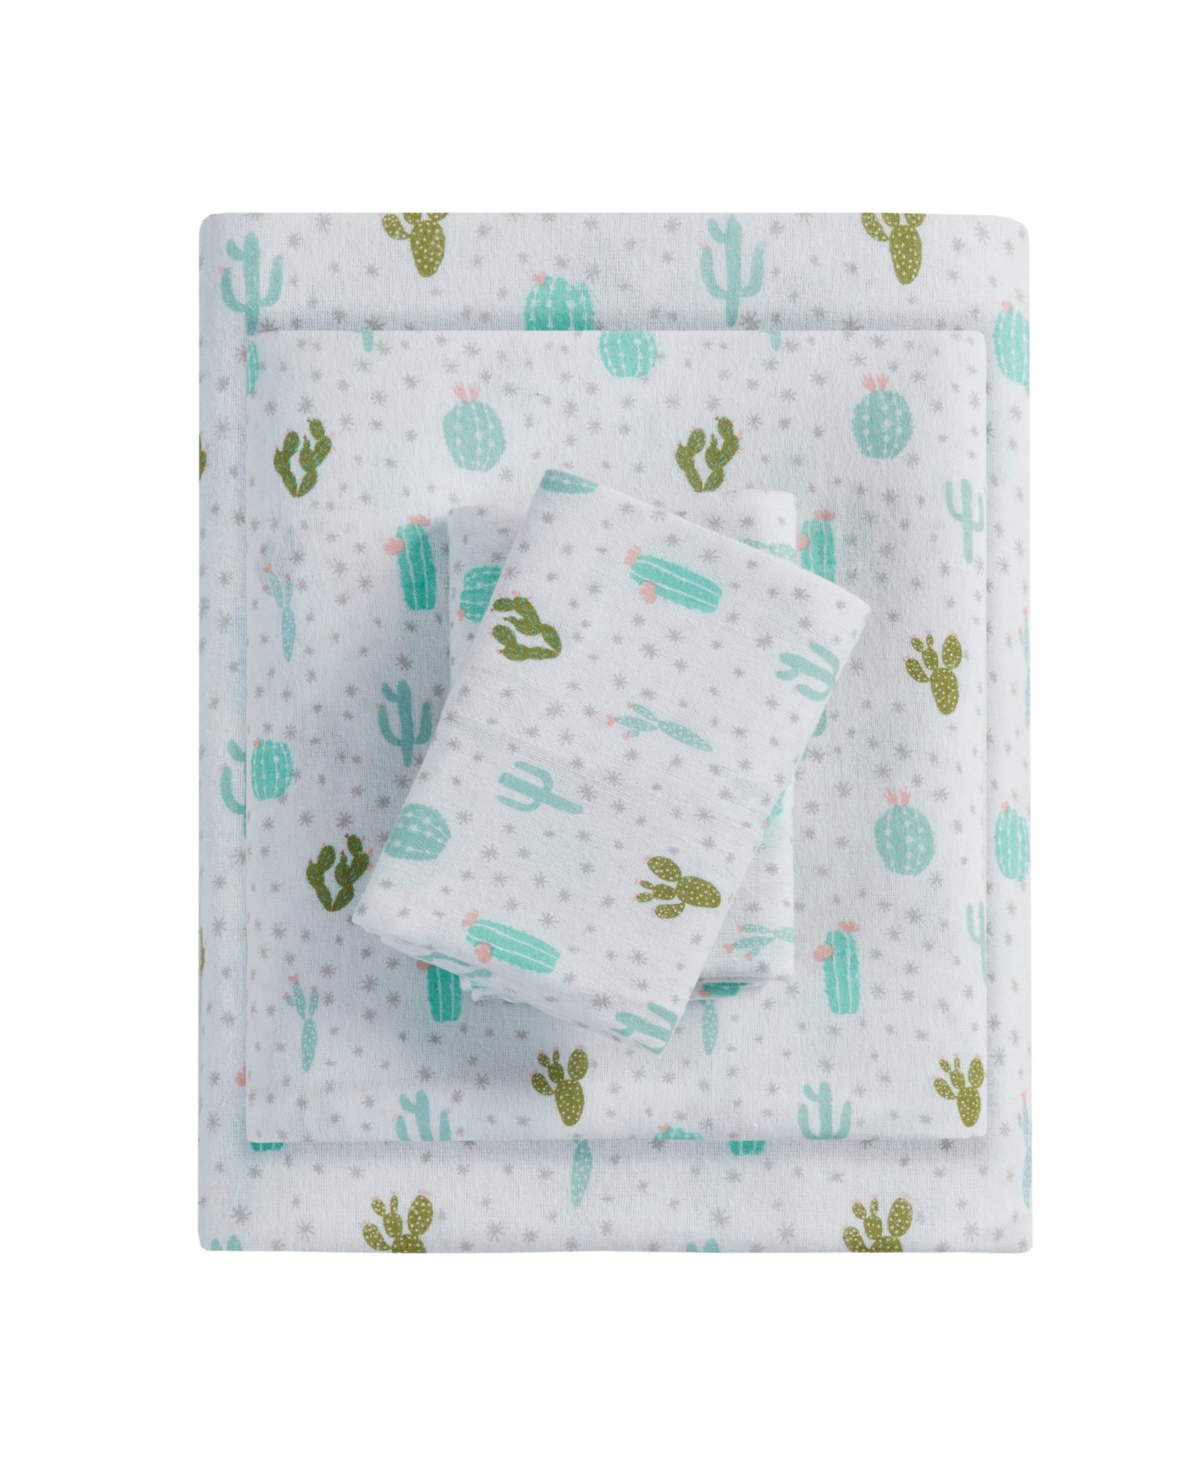 Intelligent Design Novelty Print Cotton Flannel Twin Sheet Set Bedding In Green Cactus